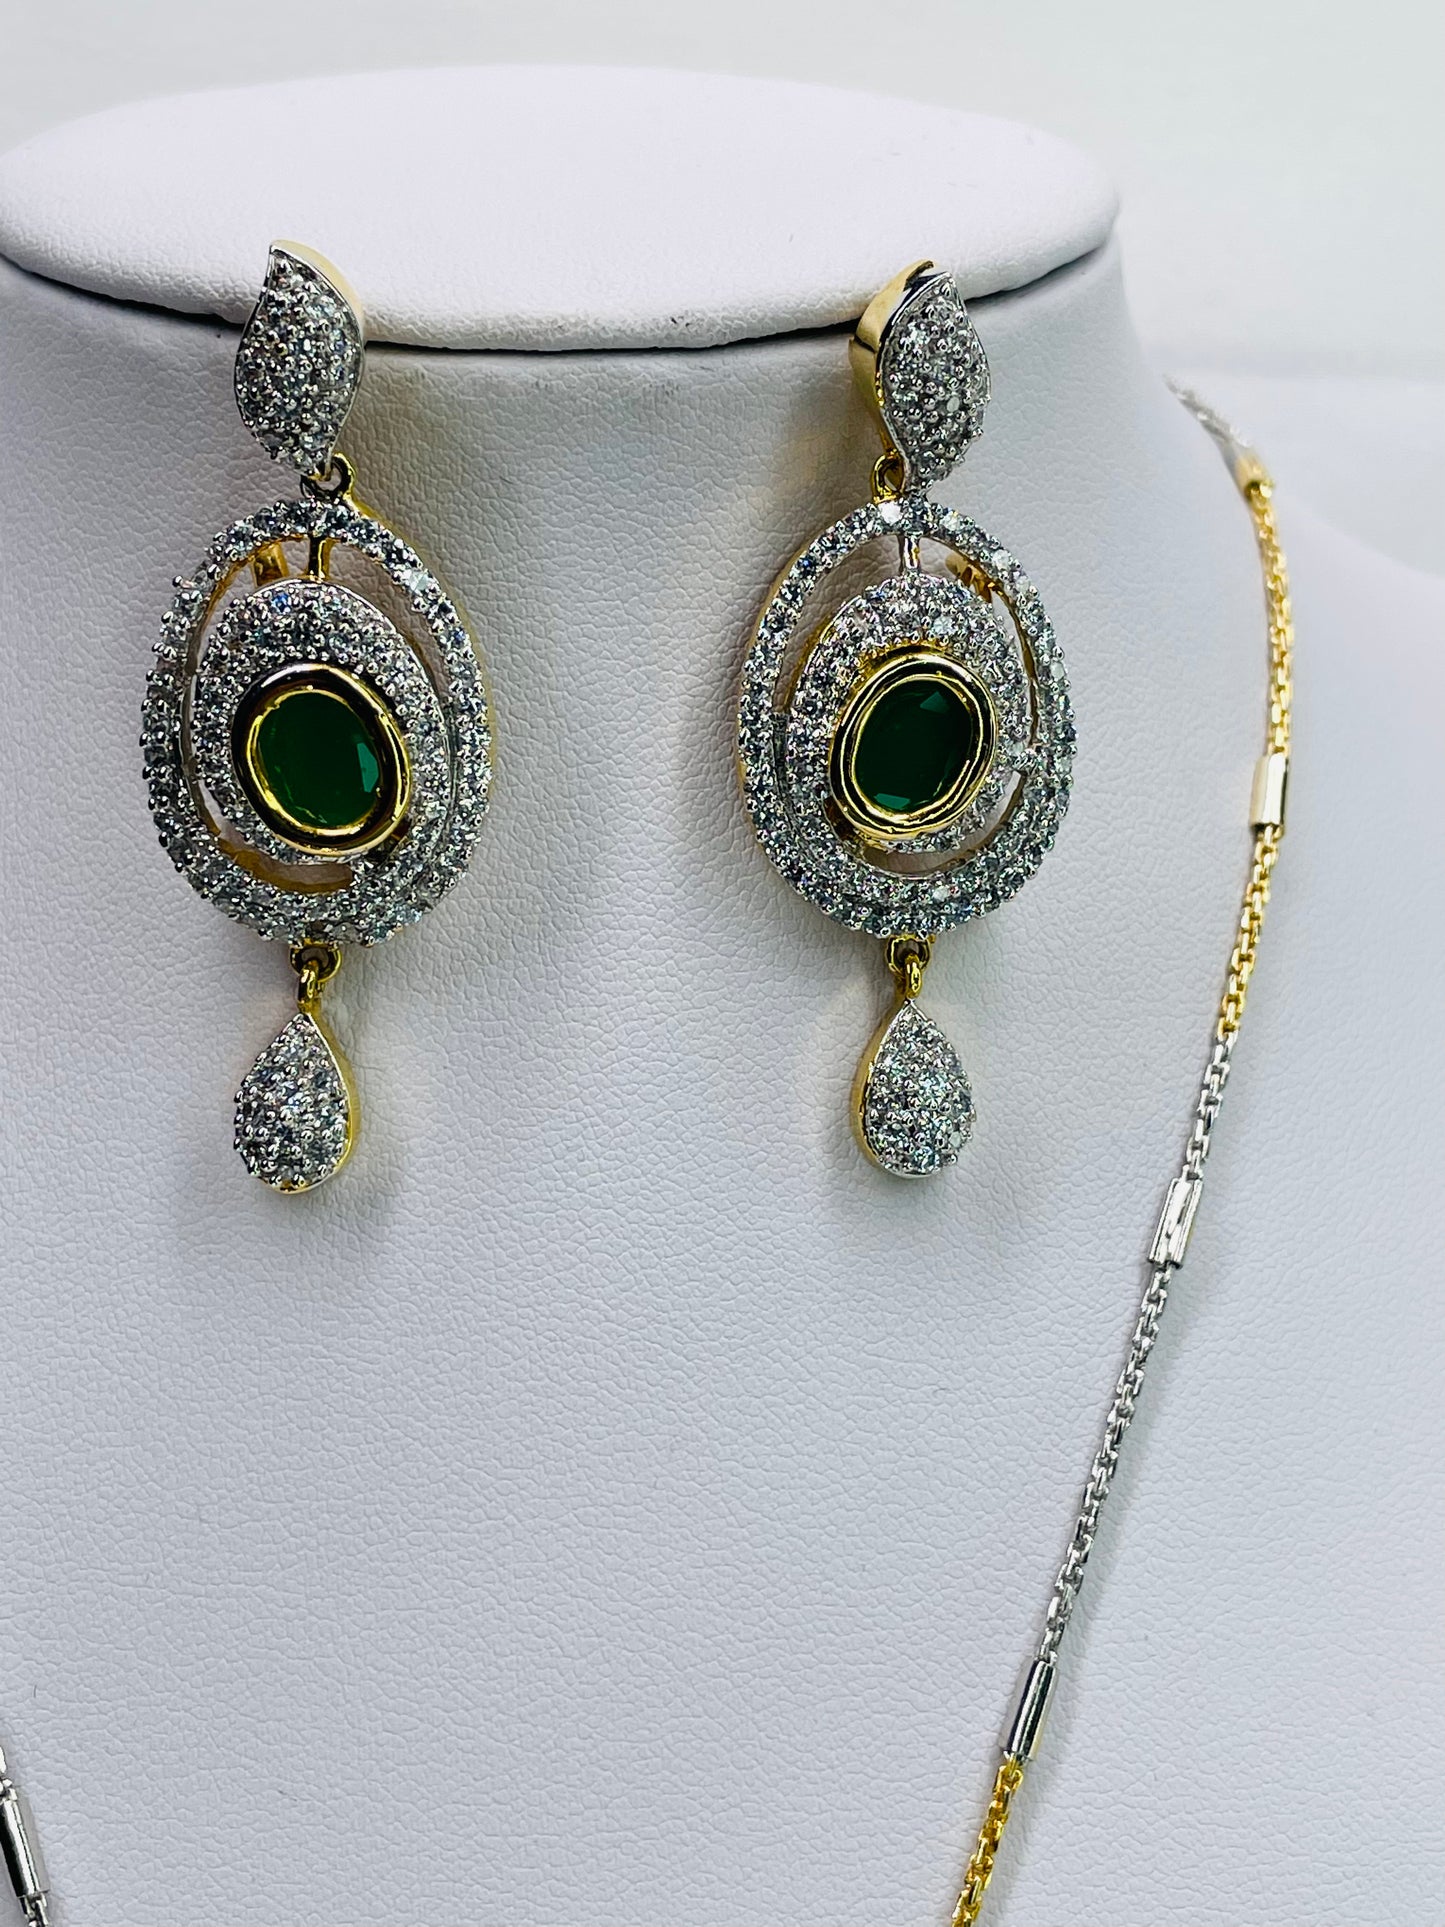 Emerald Cubic Zirconia Pendant And Earring Set